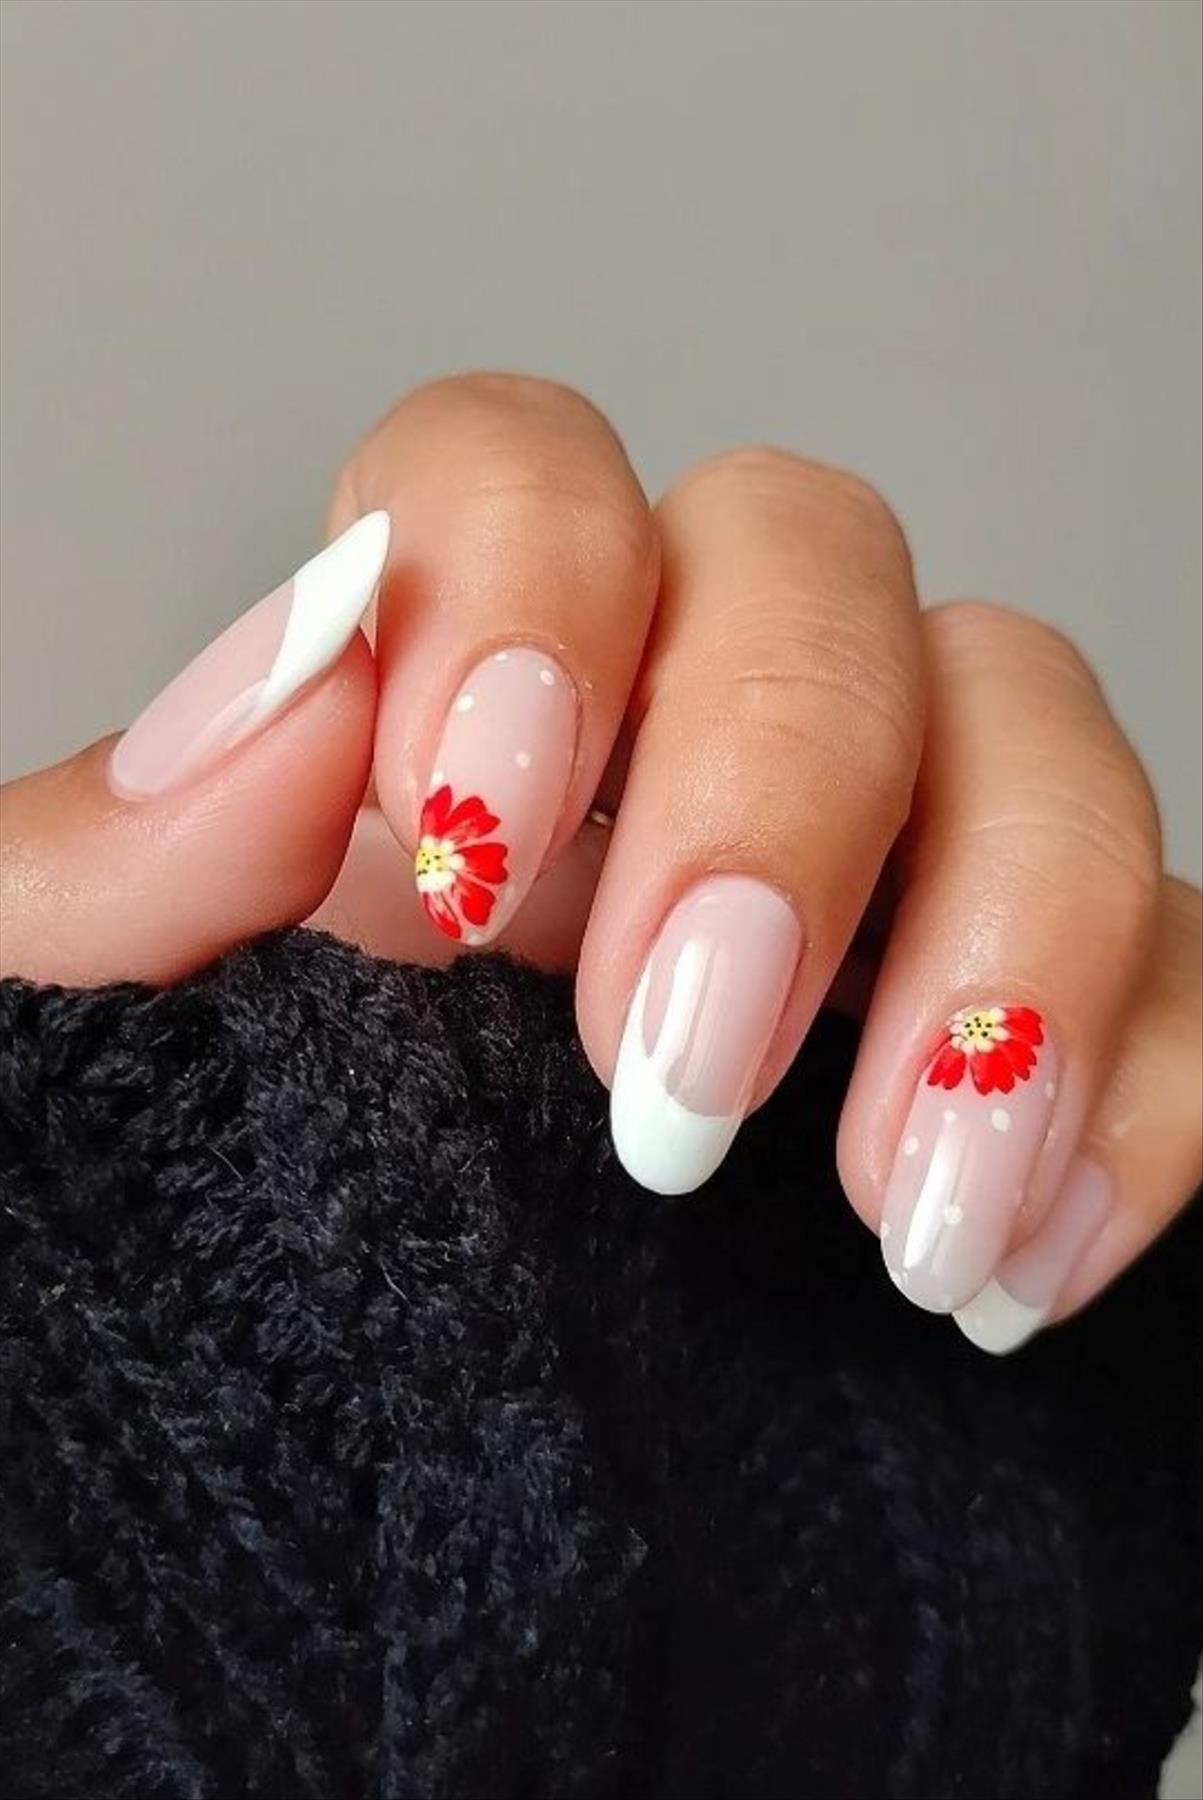 Best white nails design for graduation manicures inspiration 2022